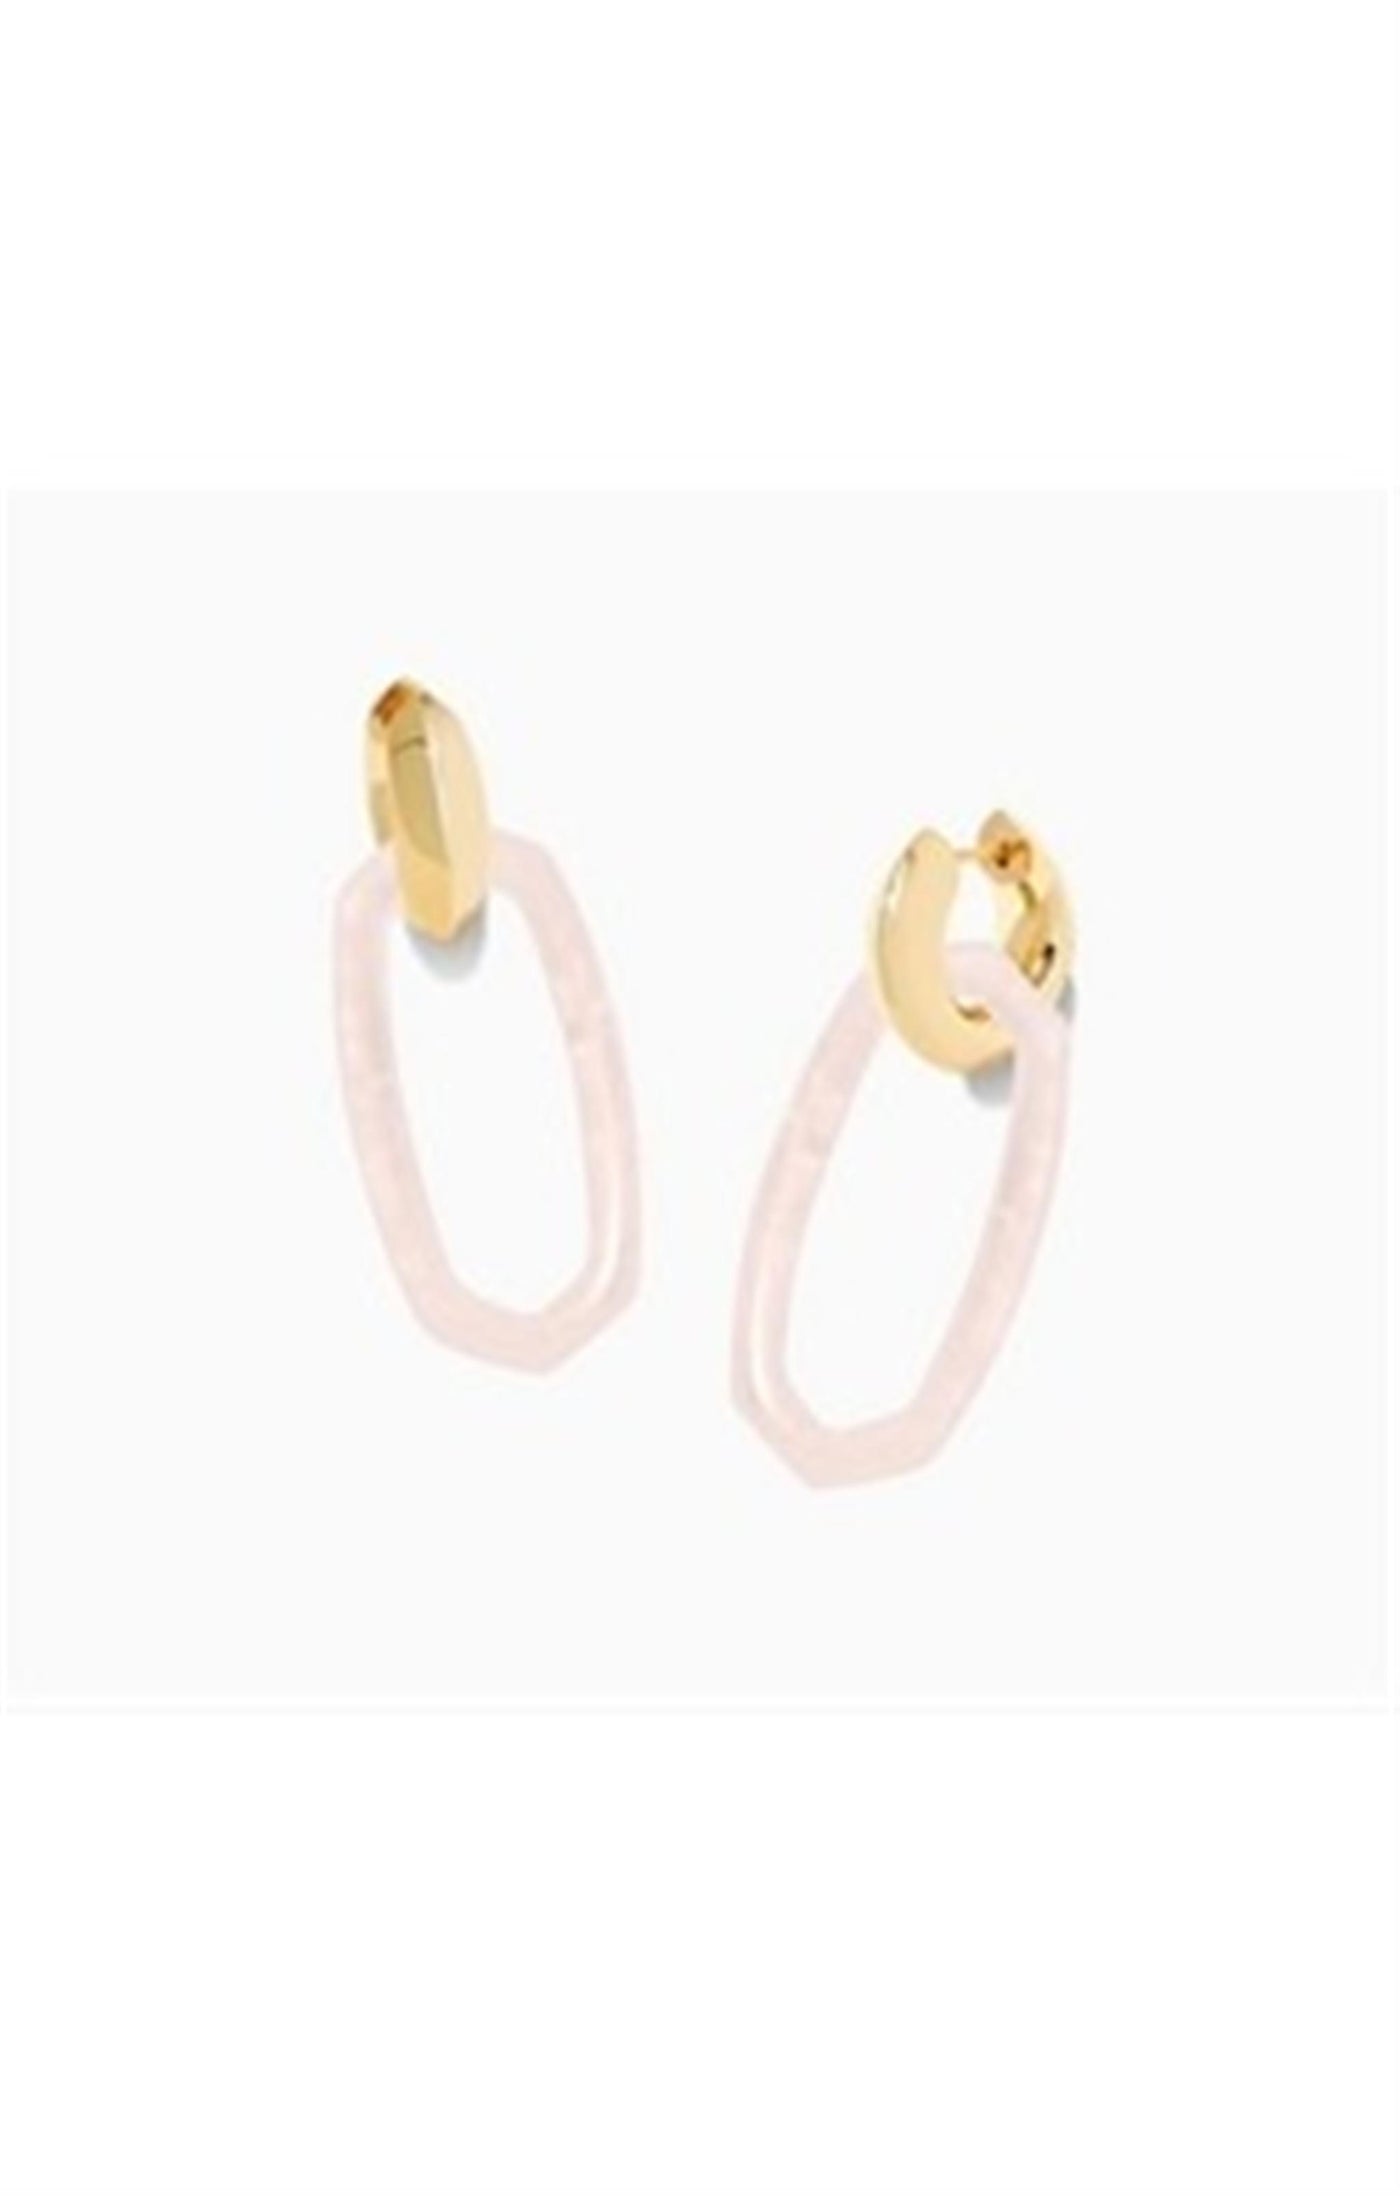 Gold Tone Earrings Featuring Rose Quartz by Kendra Scott